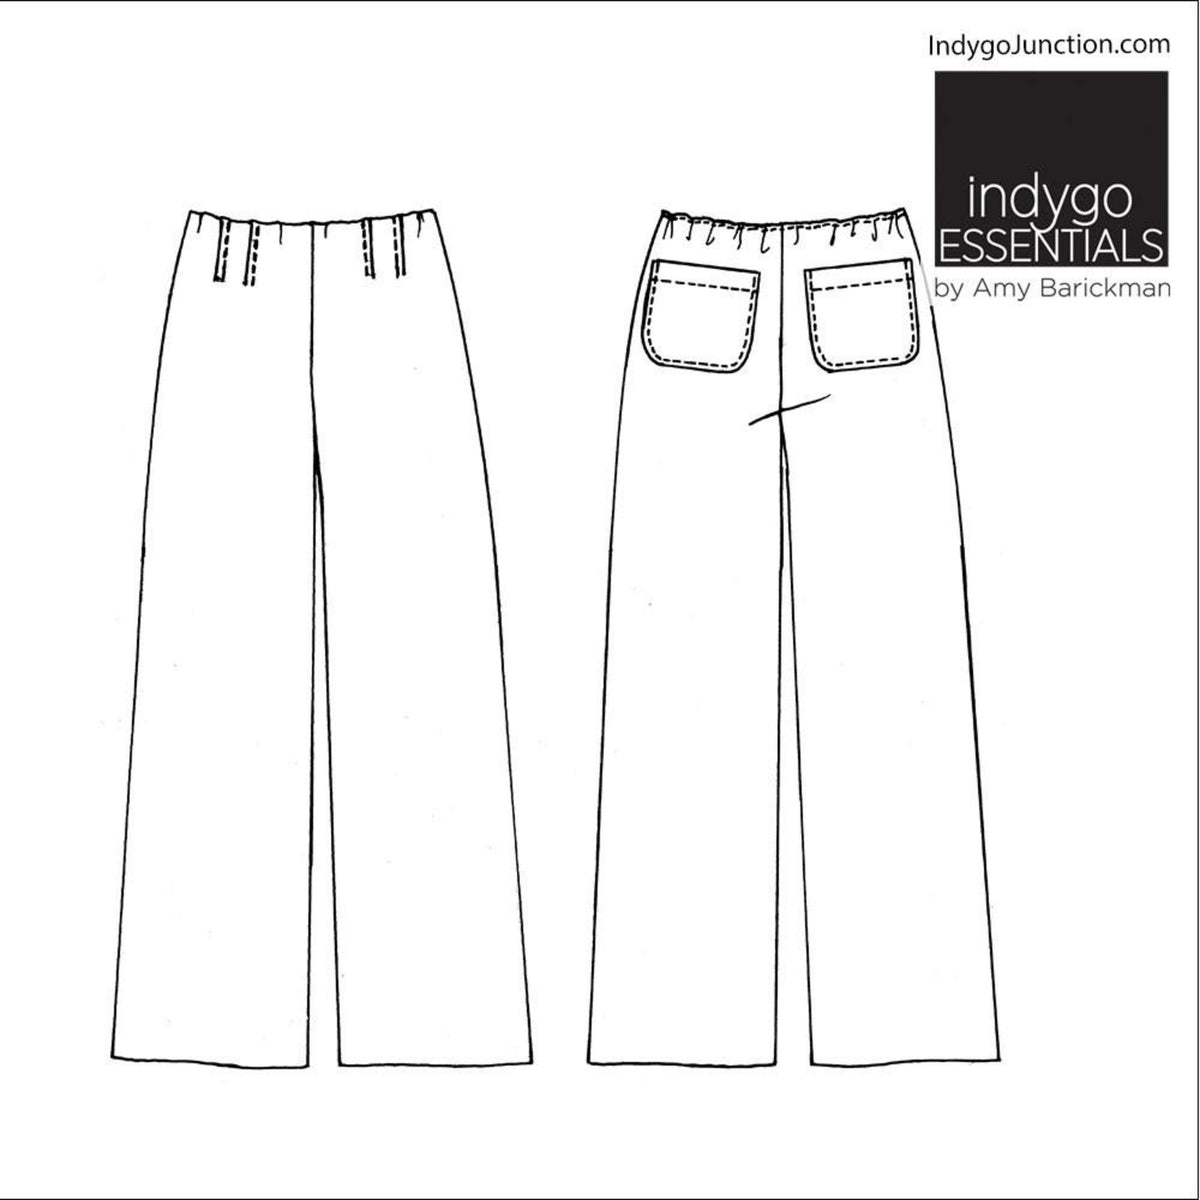 Indygo Junction Artisan Pants Pattern, Free PDF Download | Handicraft